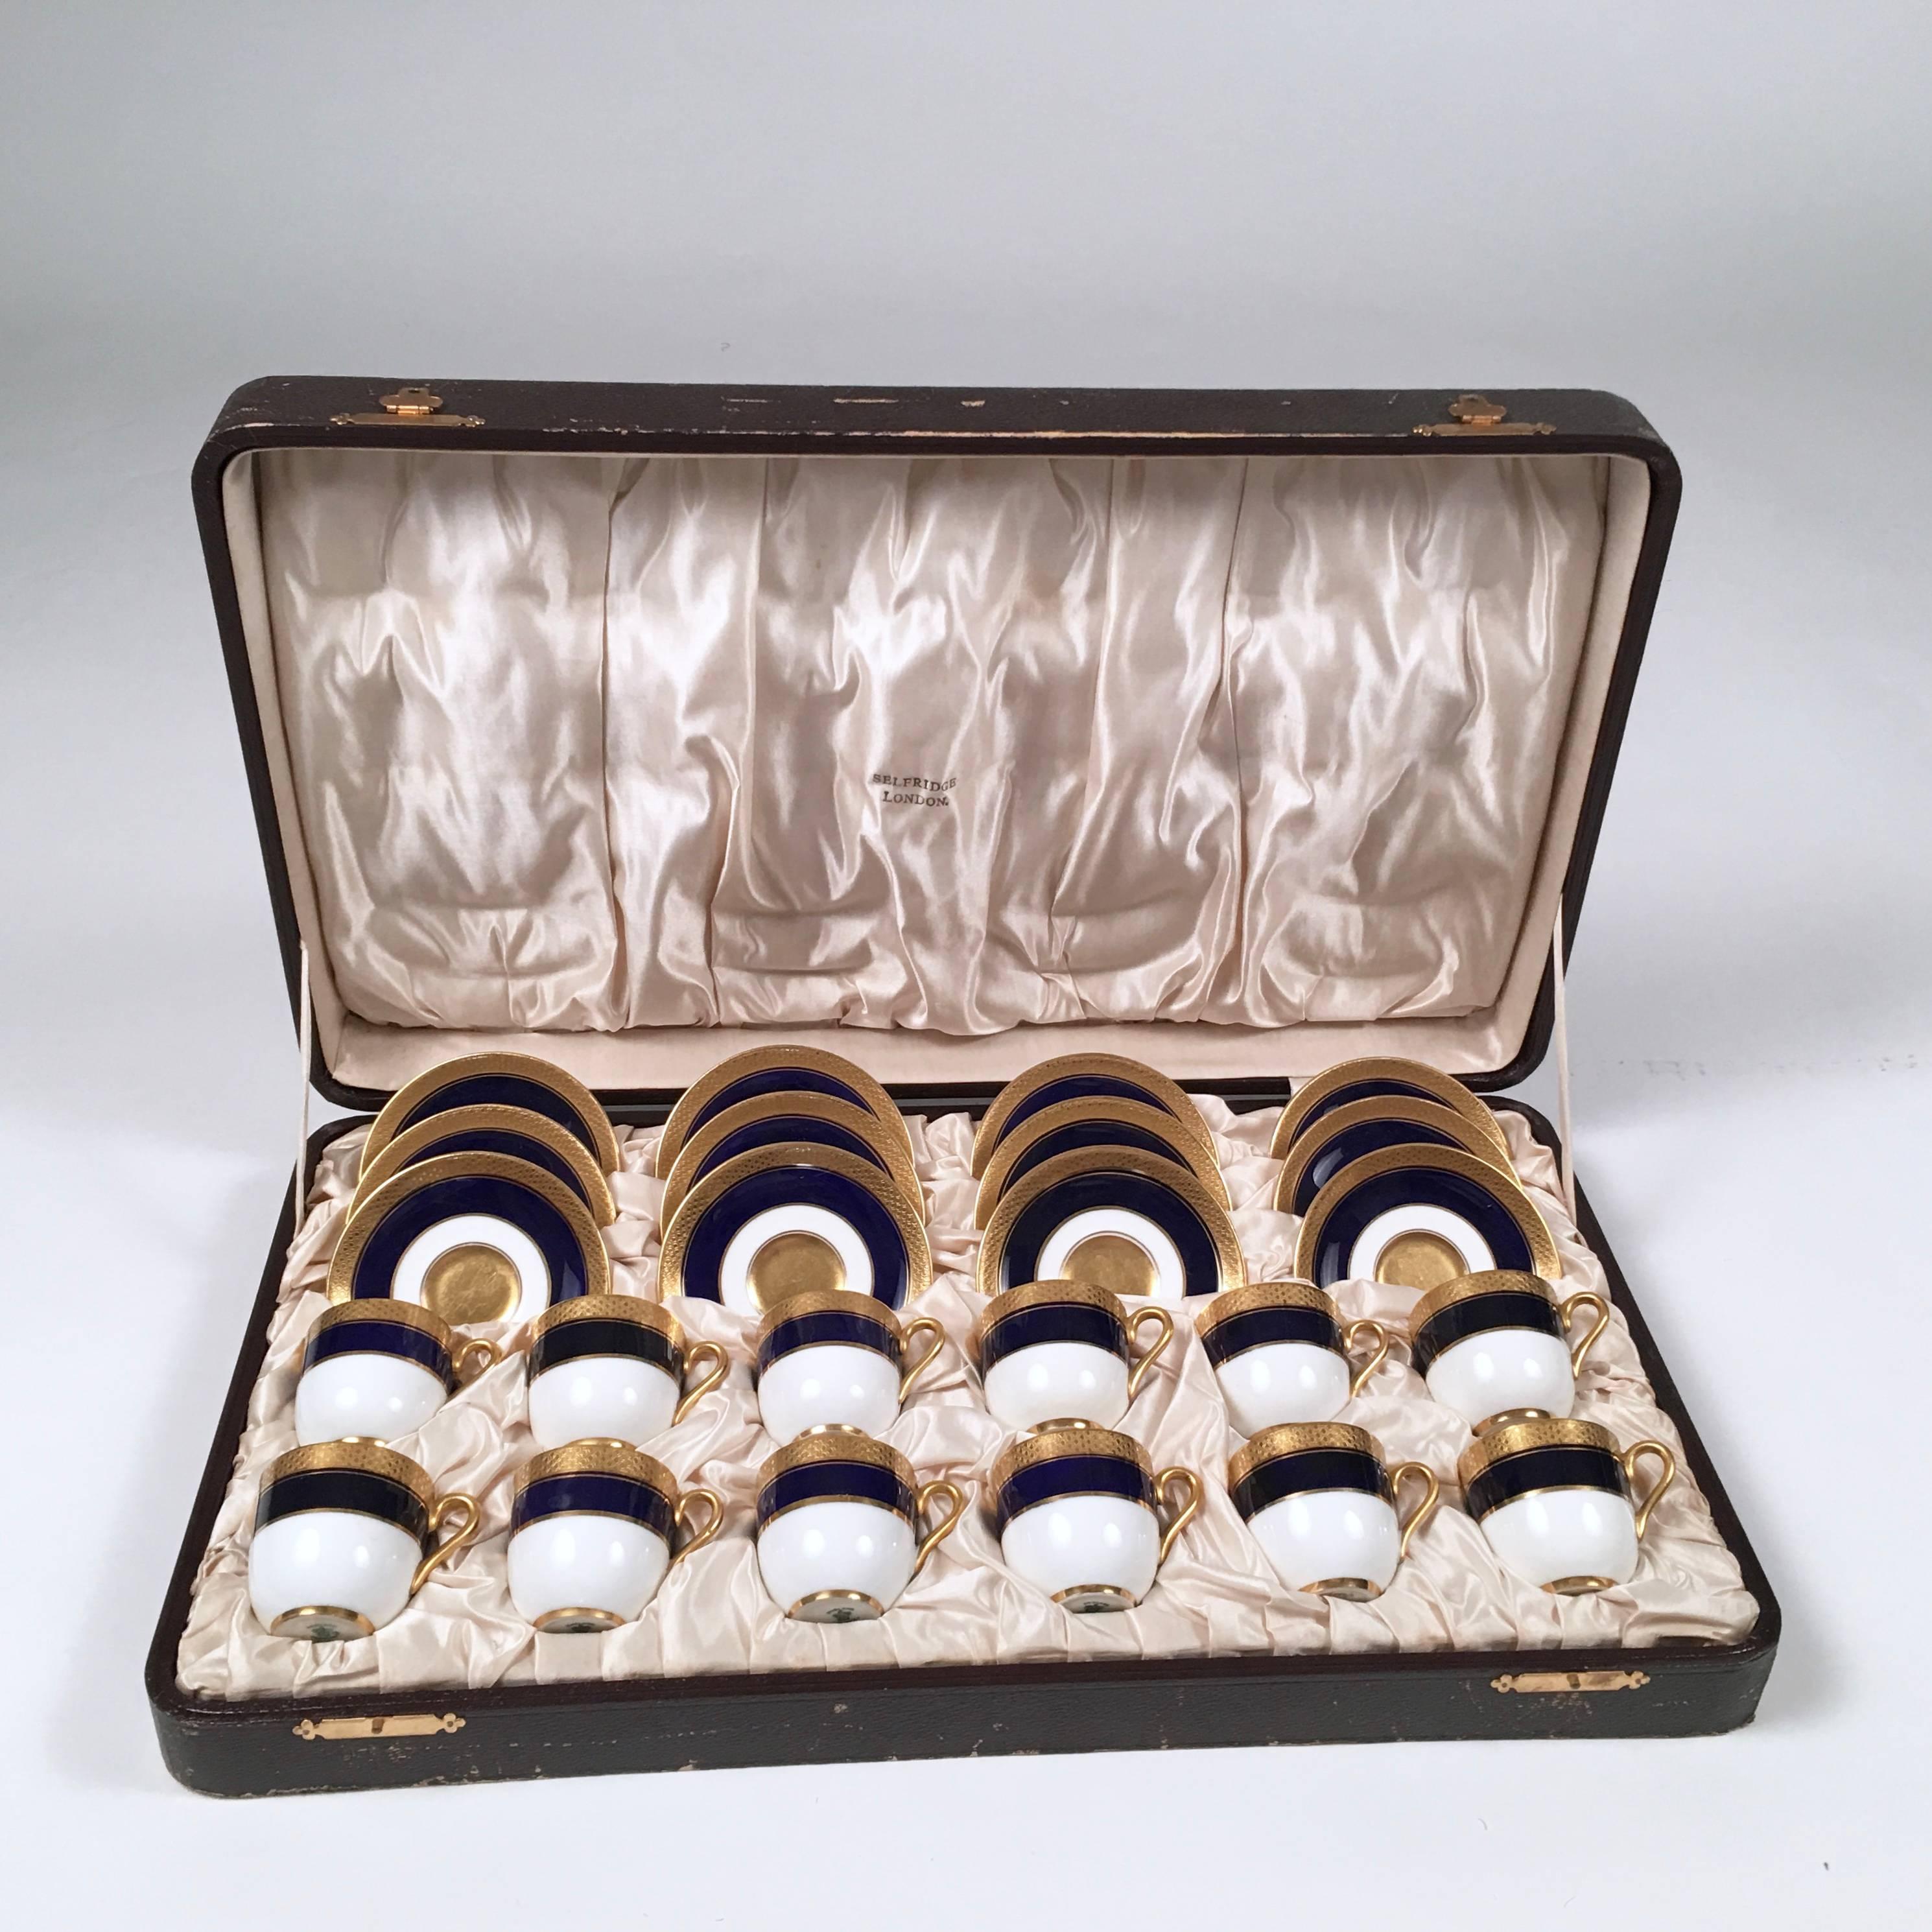 Early 20th Century Coalport Porcelain Demitasse Service in Original Selfridges Presentation Box